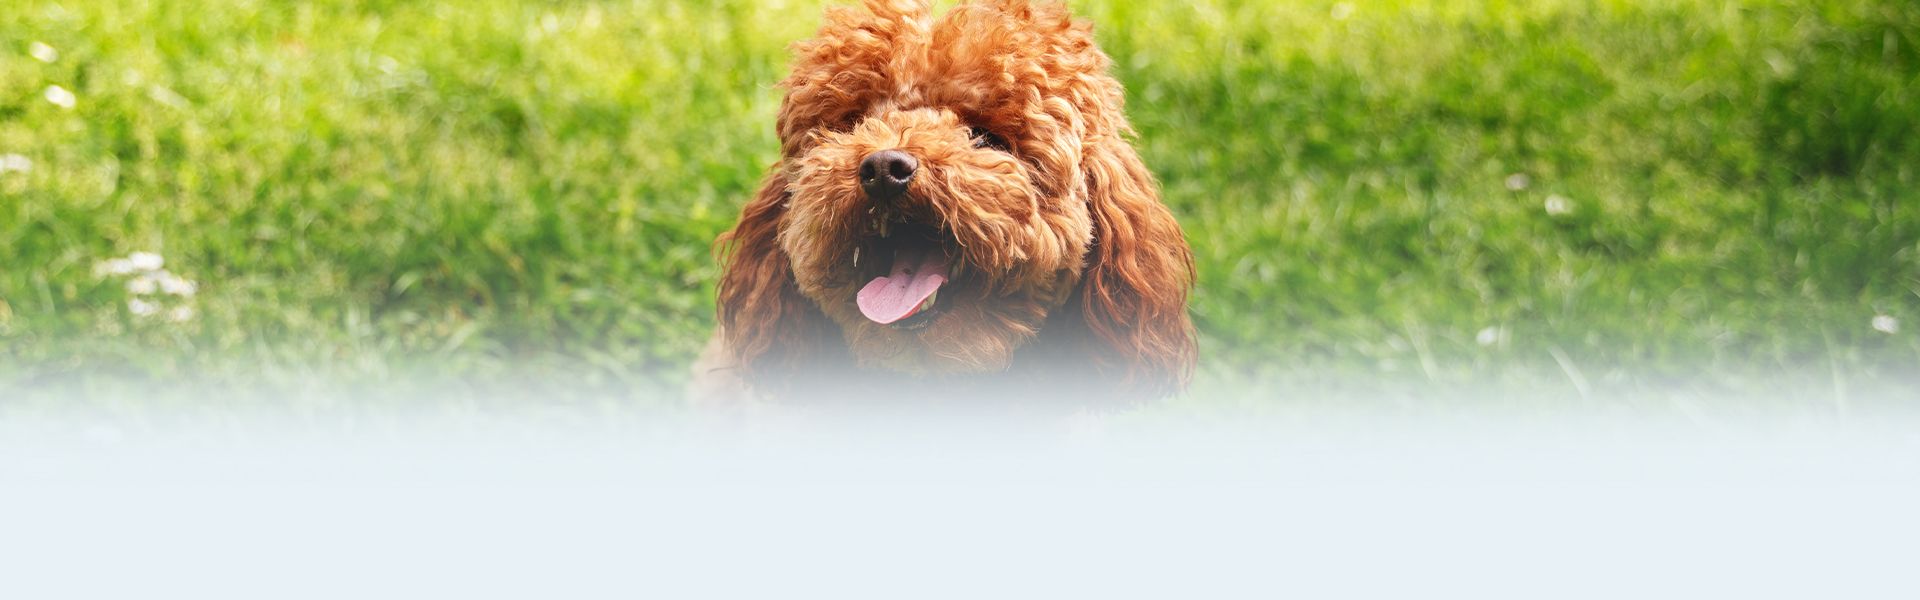 brown smiling poodle dog